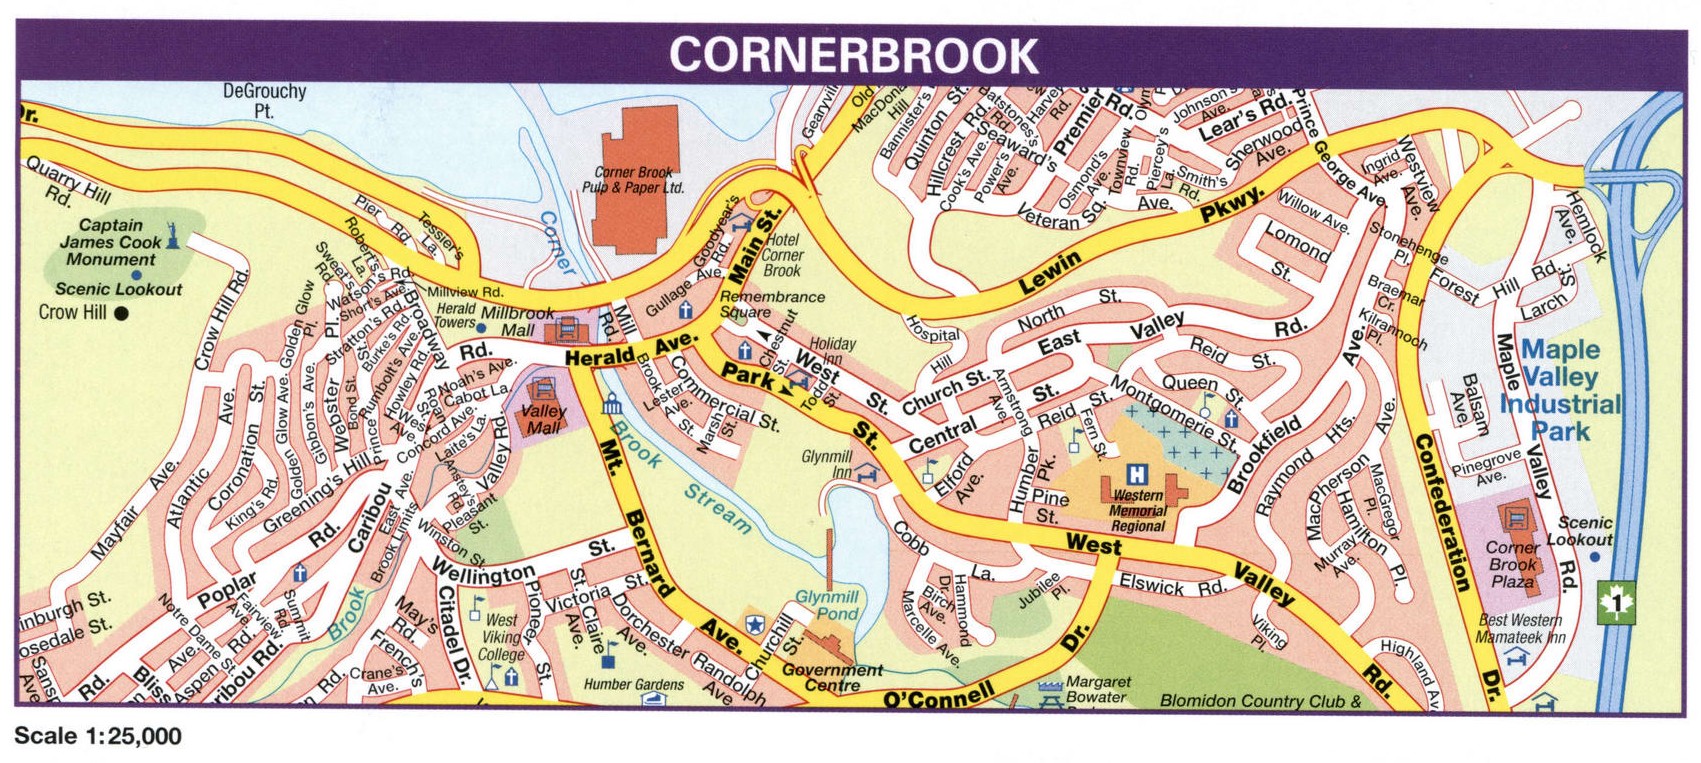 Cornerbrook city map